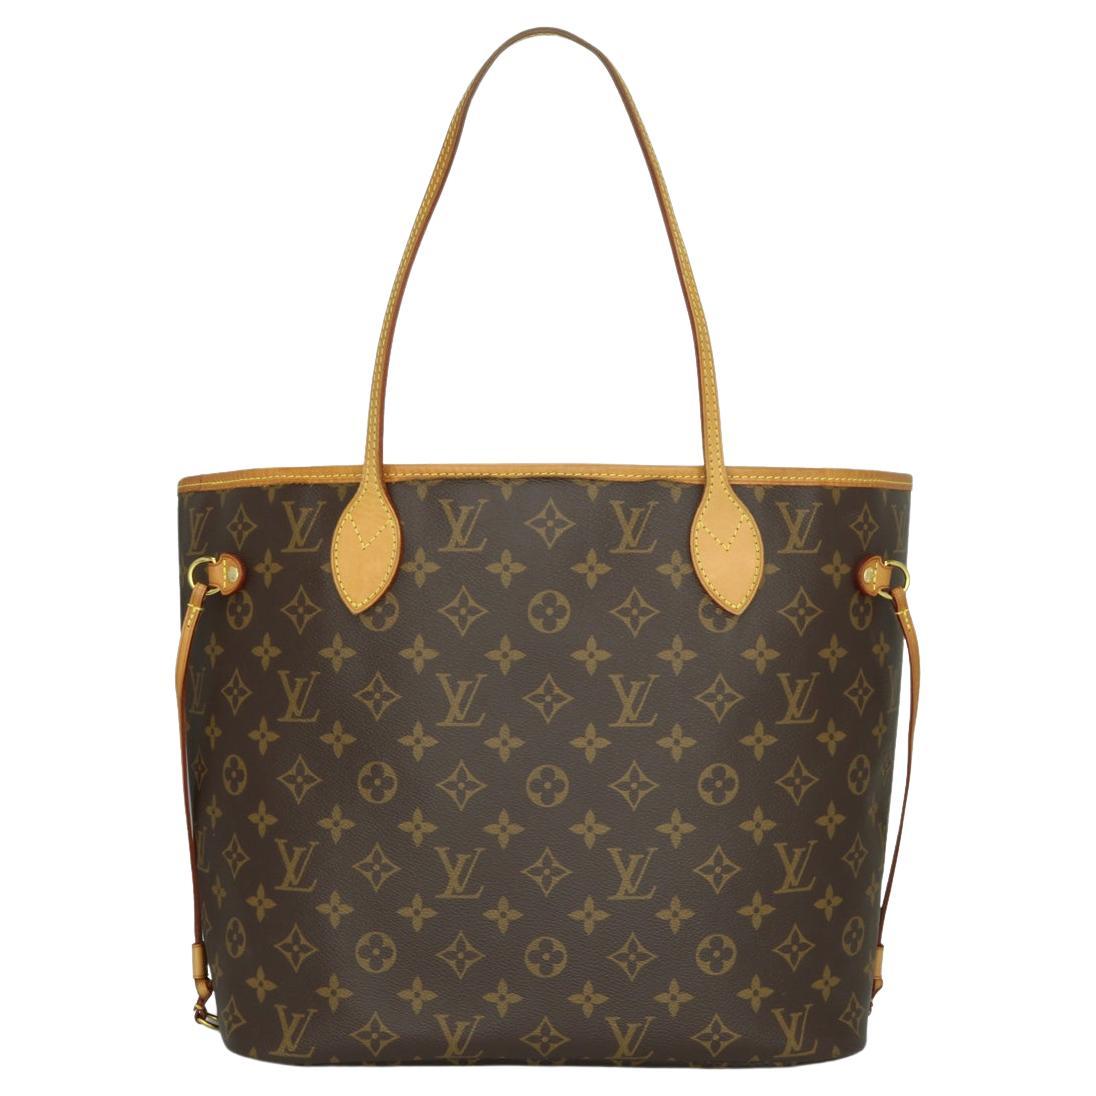 2016 Fashion #Louis #Vuitton #Handbags Outlet, Buy Cheap LV